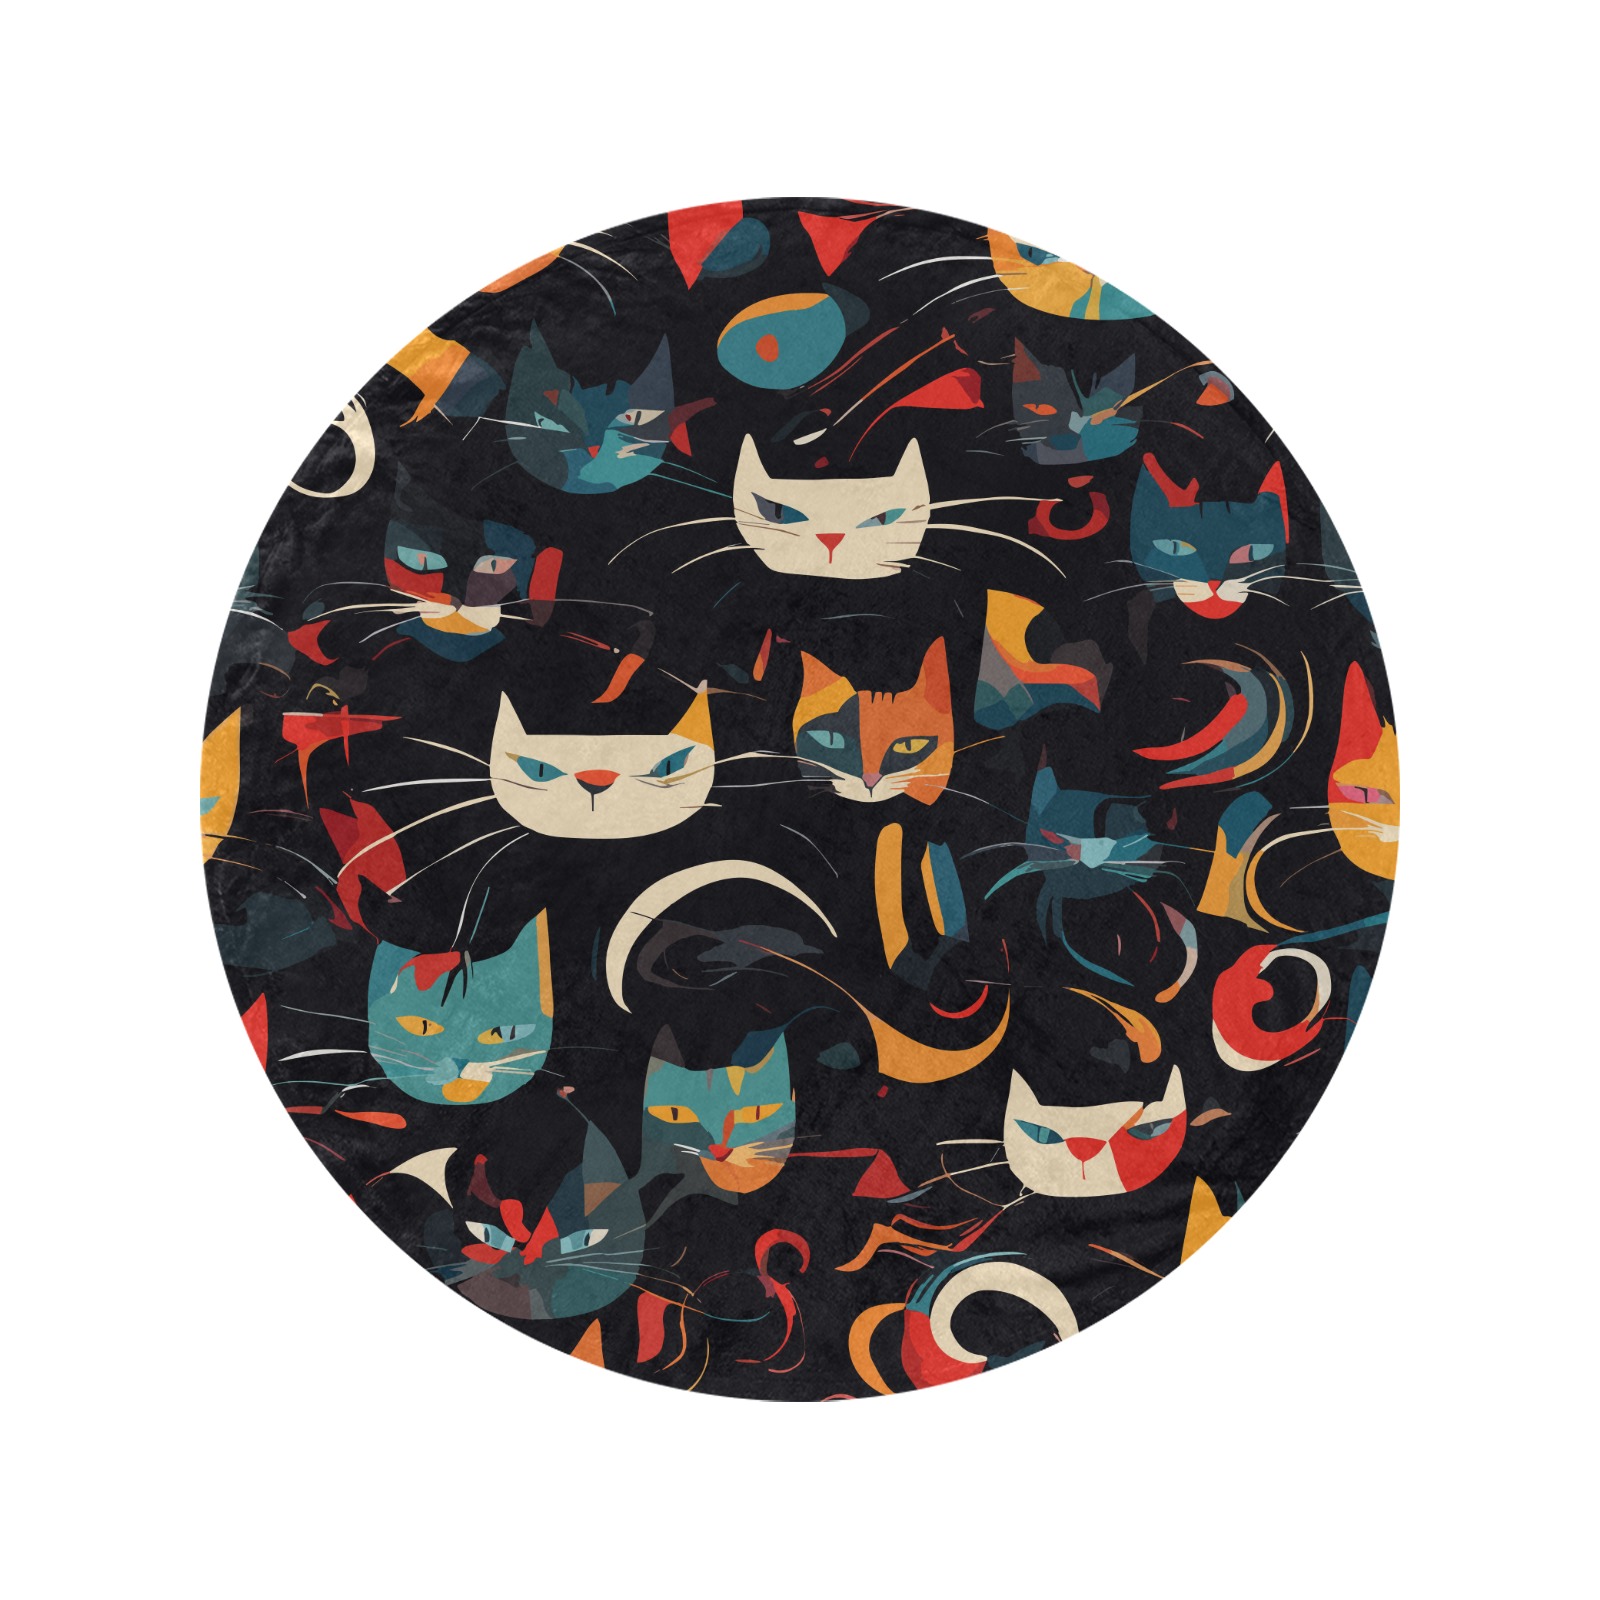 Beautiful abstract art of colorful cats. Circular Ultra-Soft Micro Fleece Blanket 60"